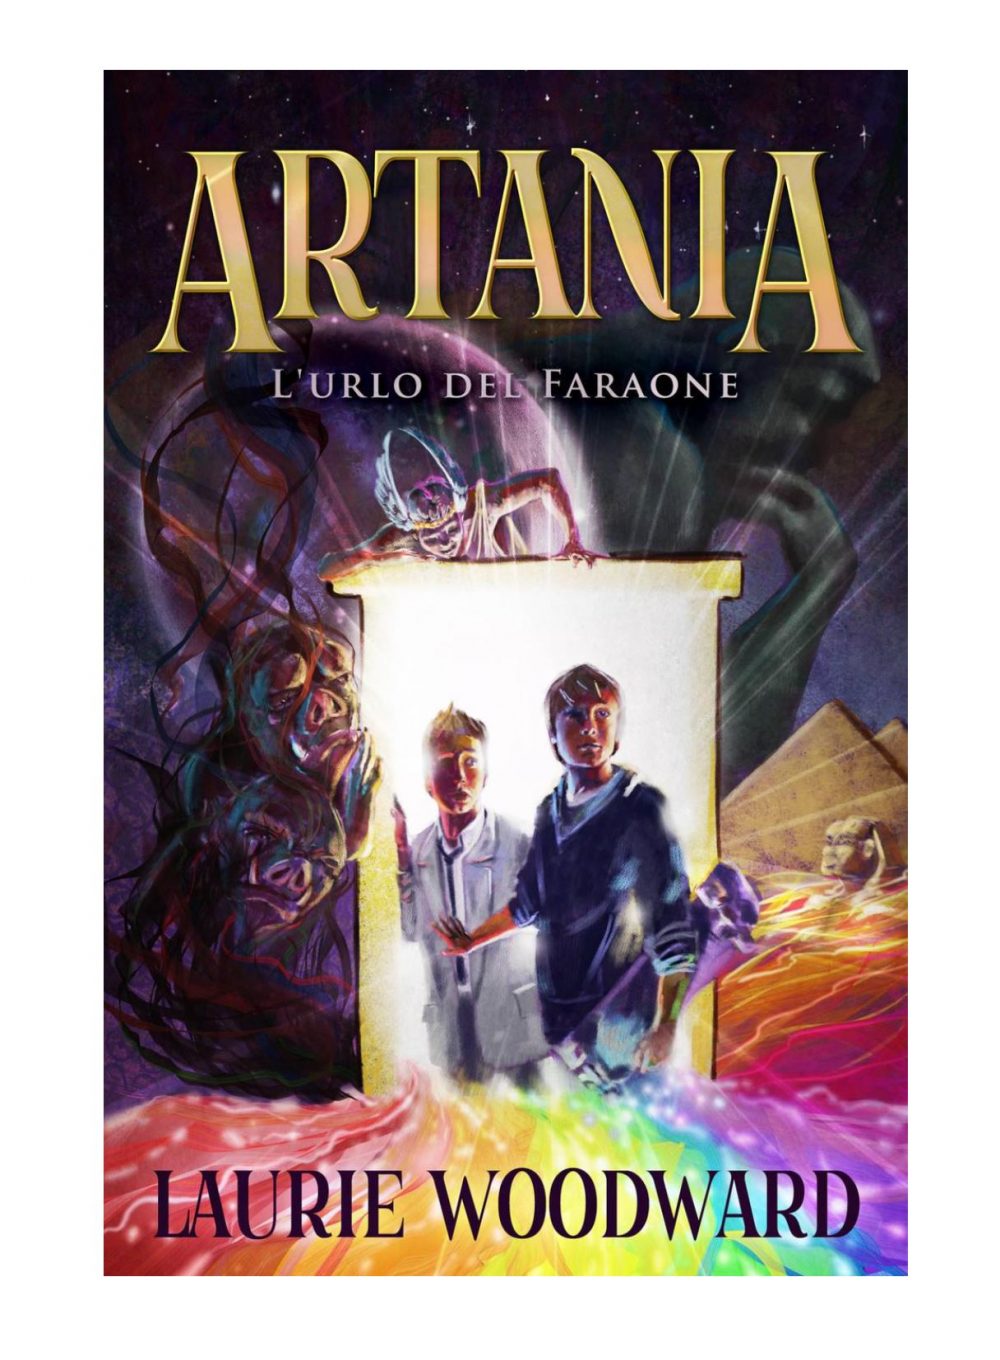 Artania translation project new publication soon from English to Italian main translator Ilaria Petri